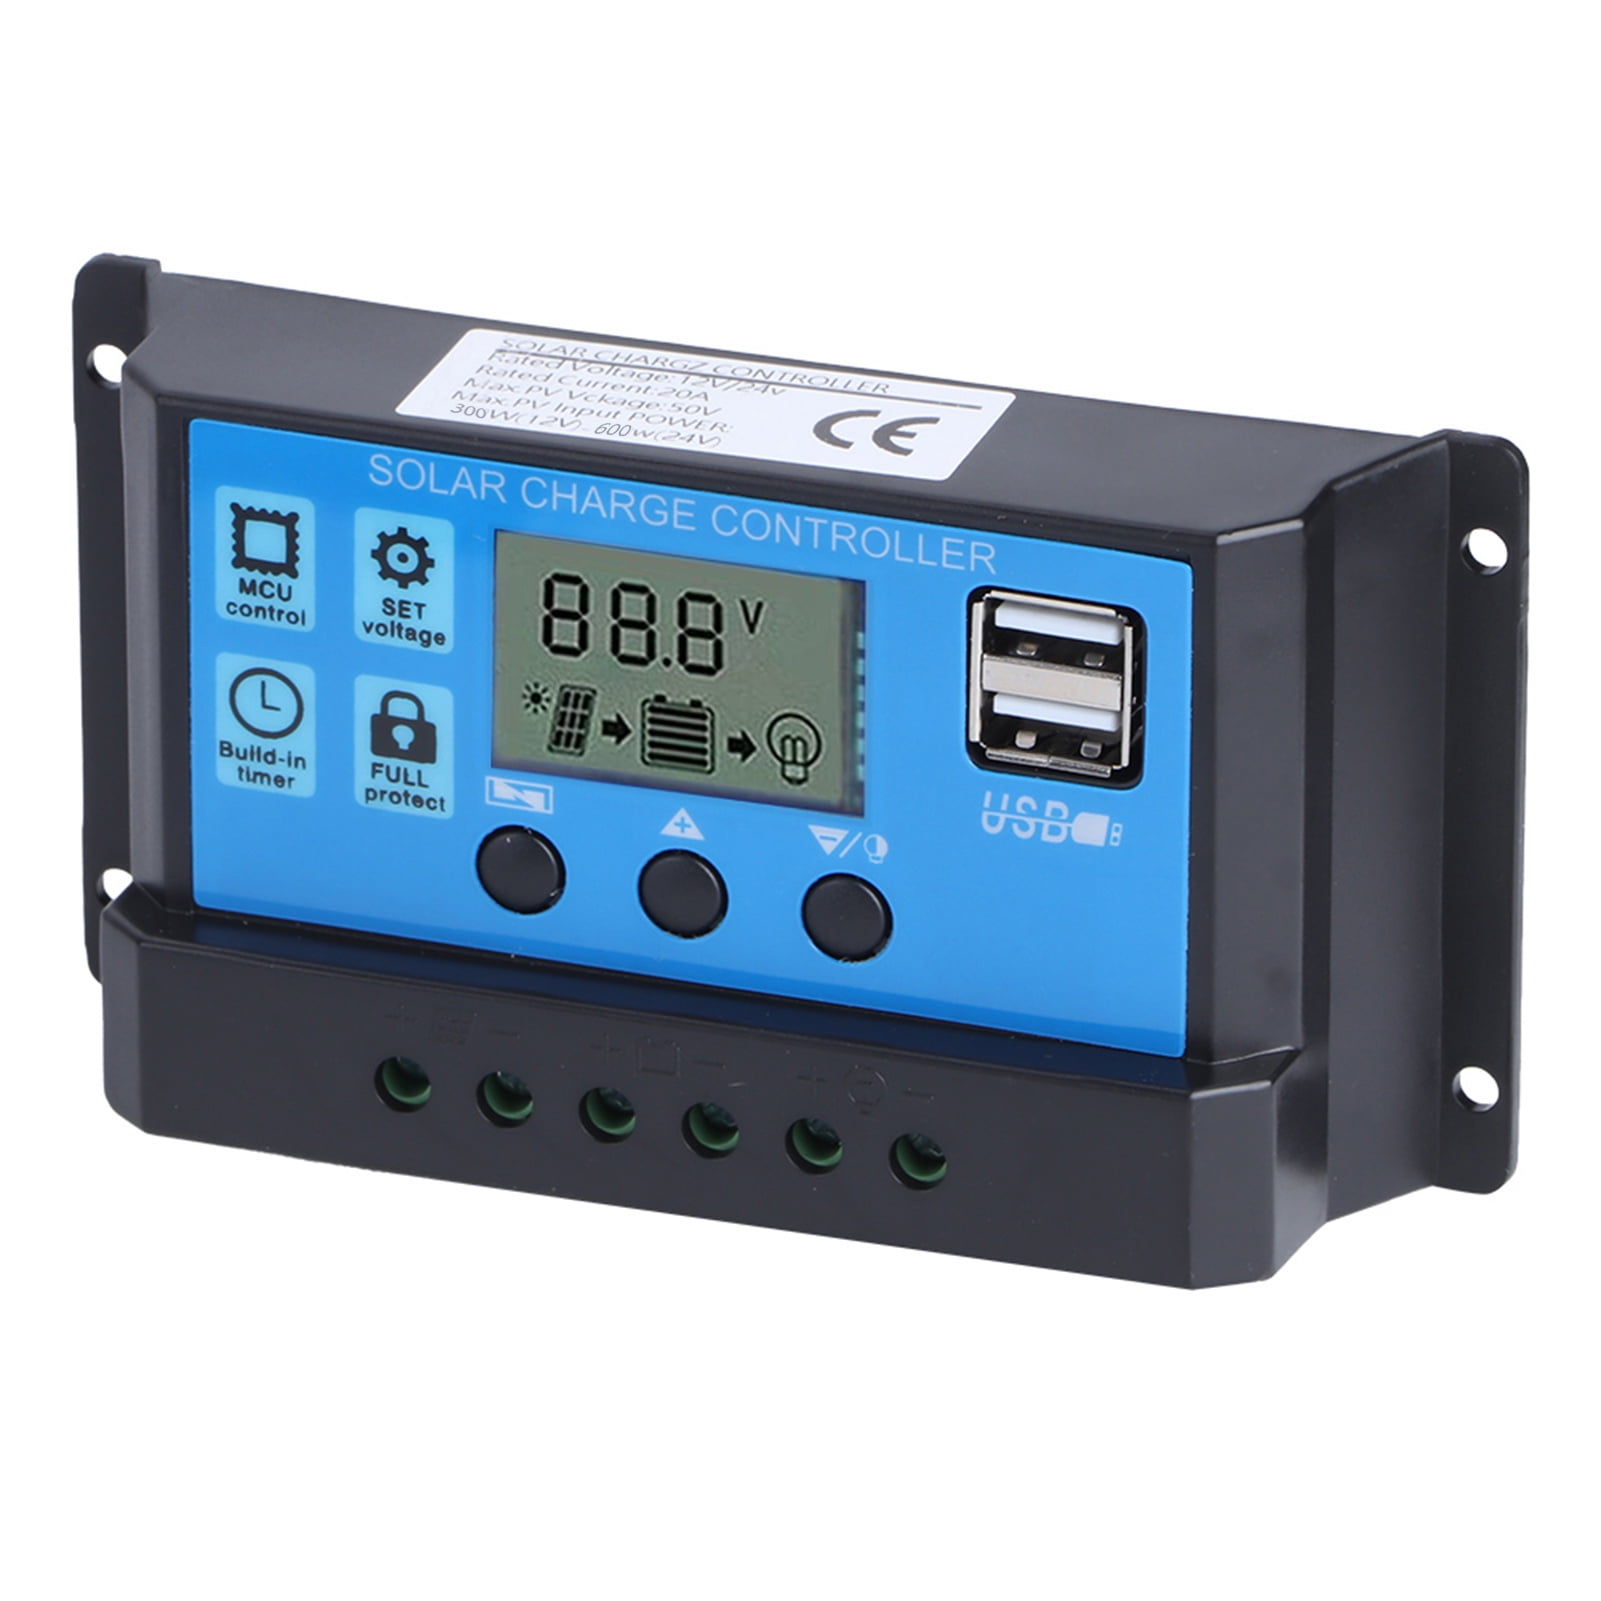 Auto Switch CE TSR Safe YS Solar Panel Charger Controller Regulator 10A 12V/24V 